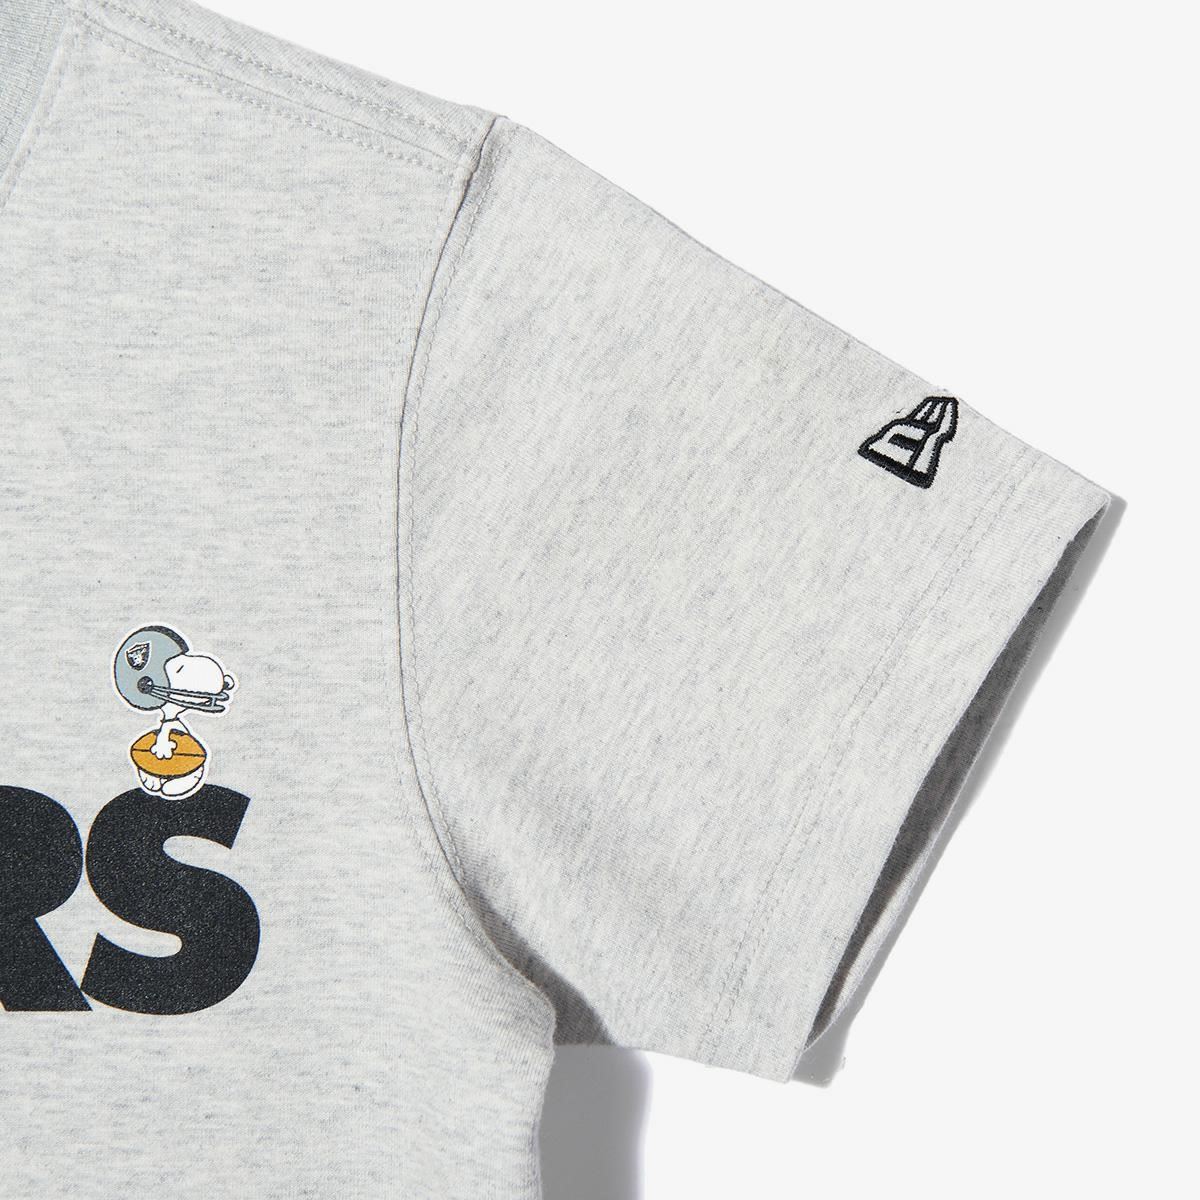 Oakland Raiders - New Era T-Shirt / Tee - NFL Peanuts Edition - Grey